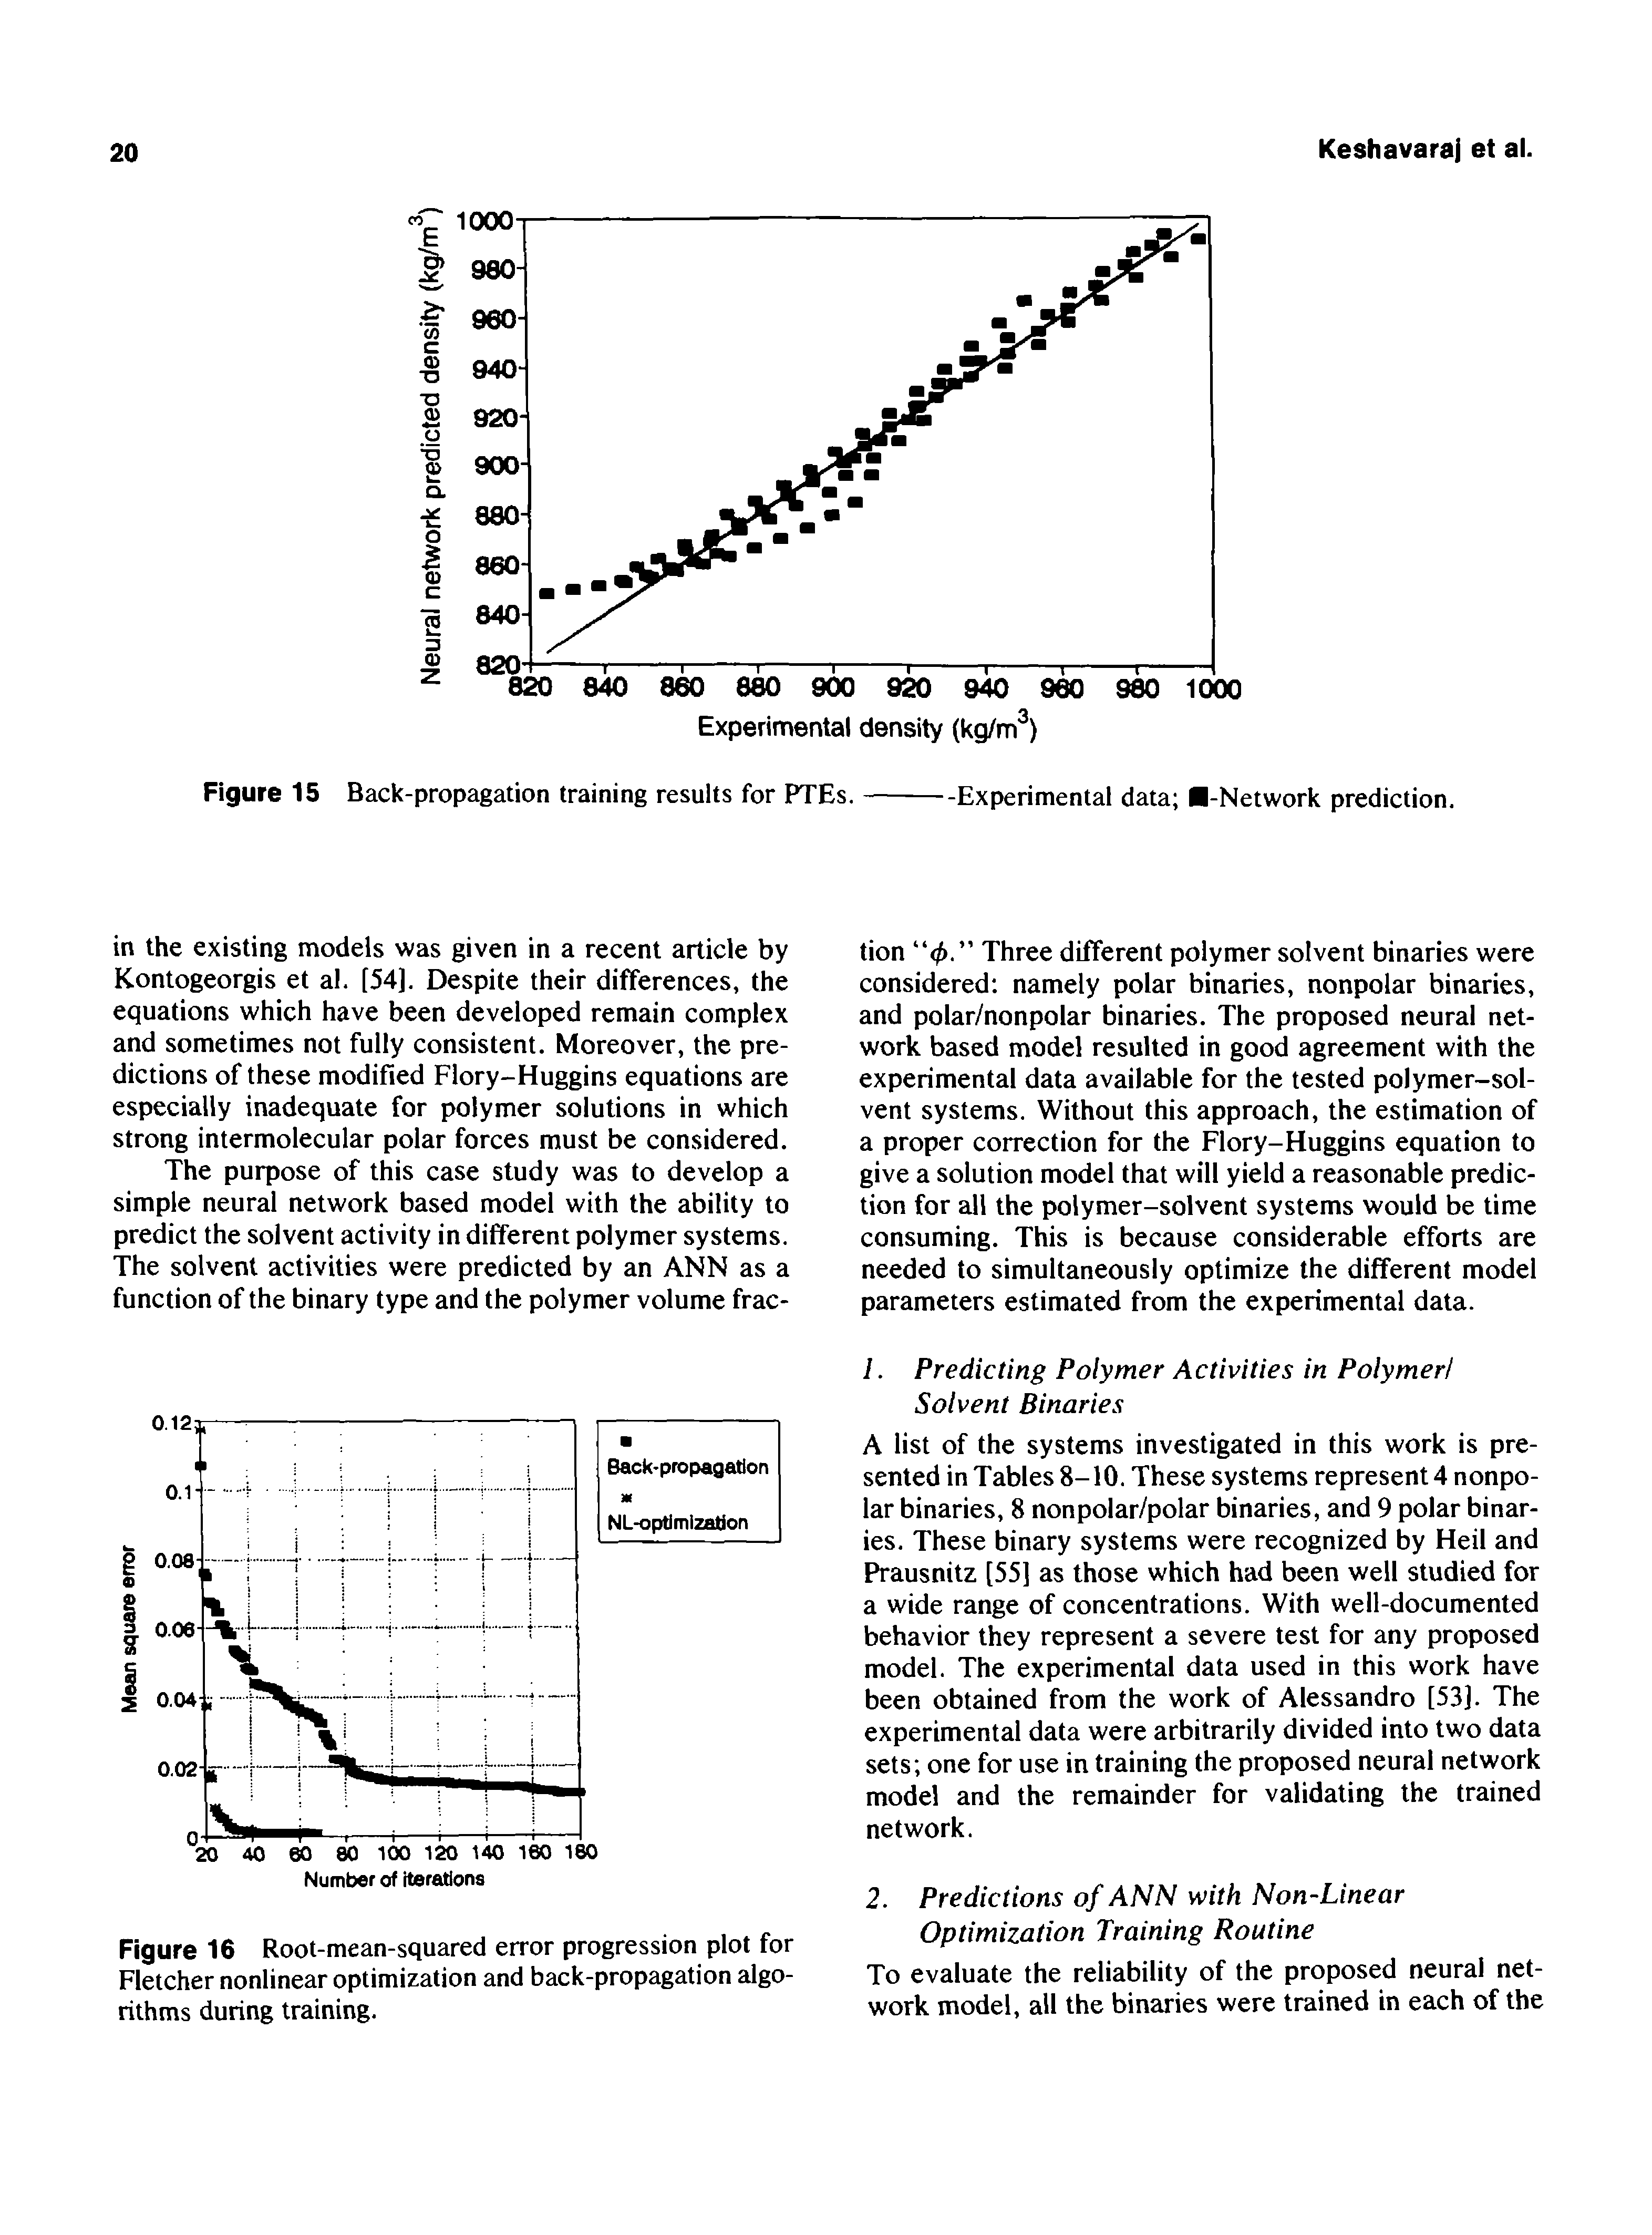 Figure 16 Root-mean-squared error progression plot for Fletcher nonlinear optimization and back-propagation algorithms during training.